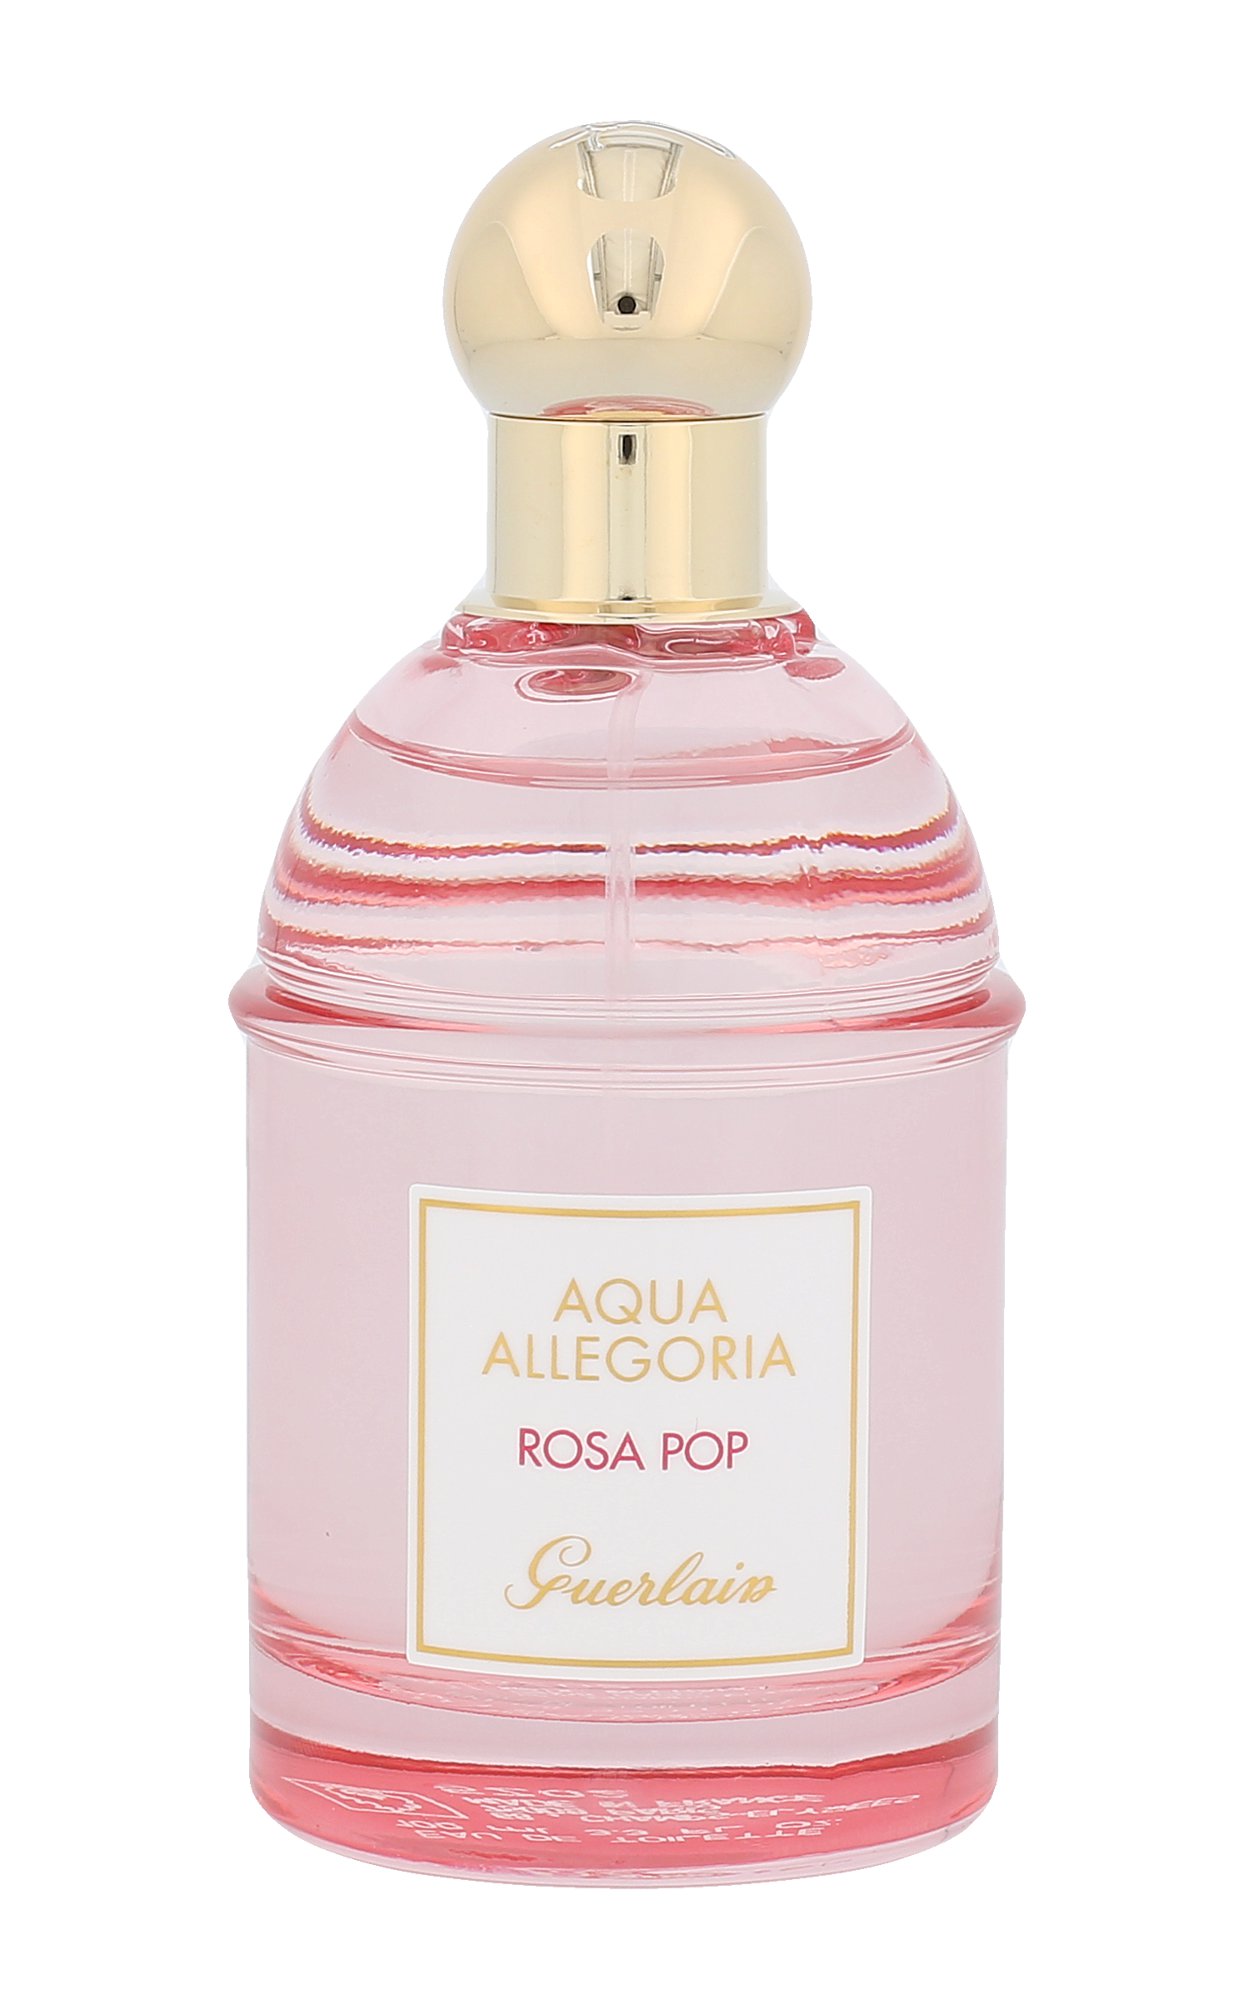 Guerlain Aqua Allegoria Rosa Pop, Toaletní voda 100ml